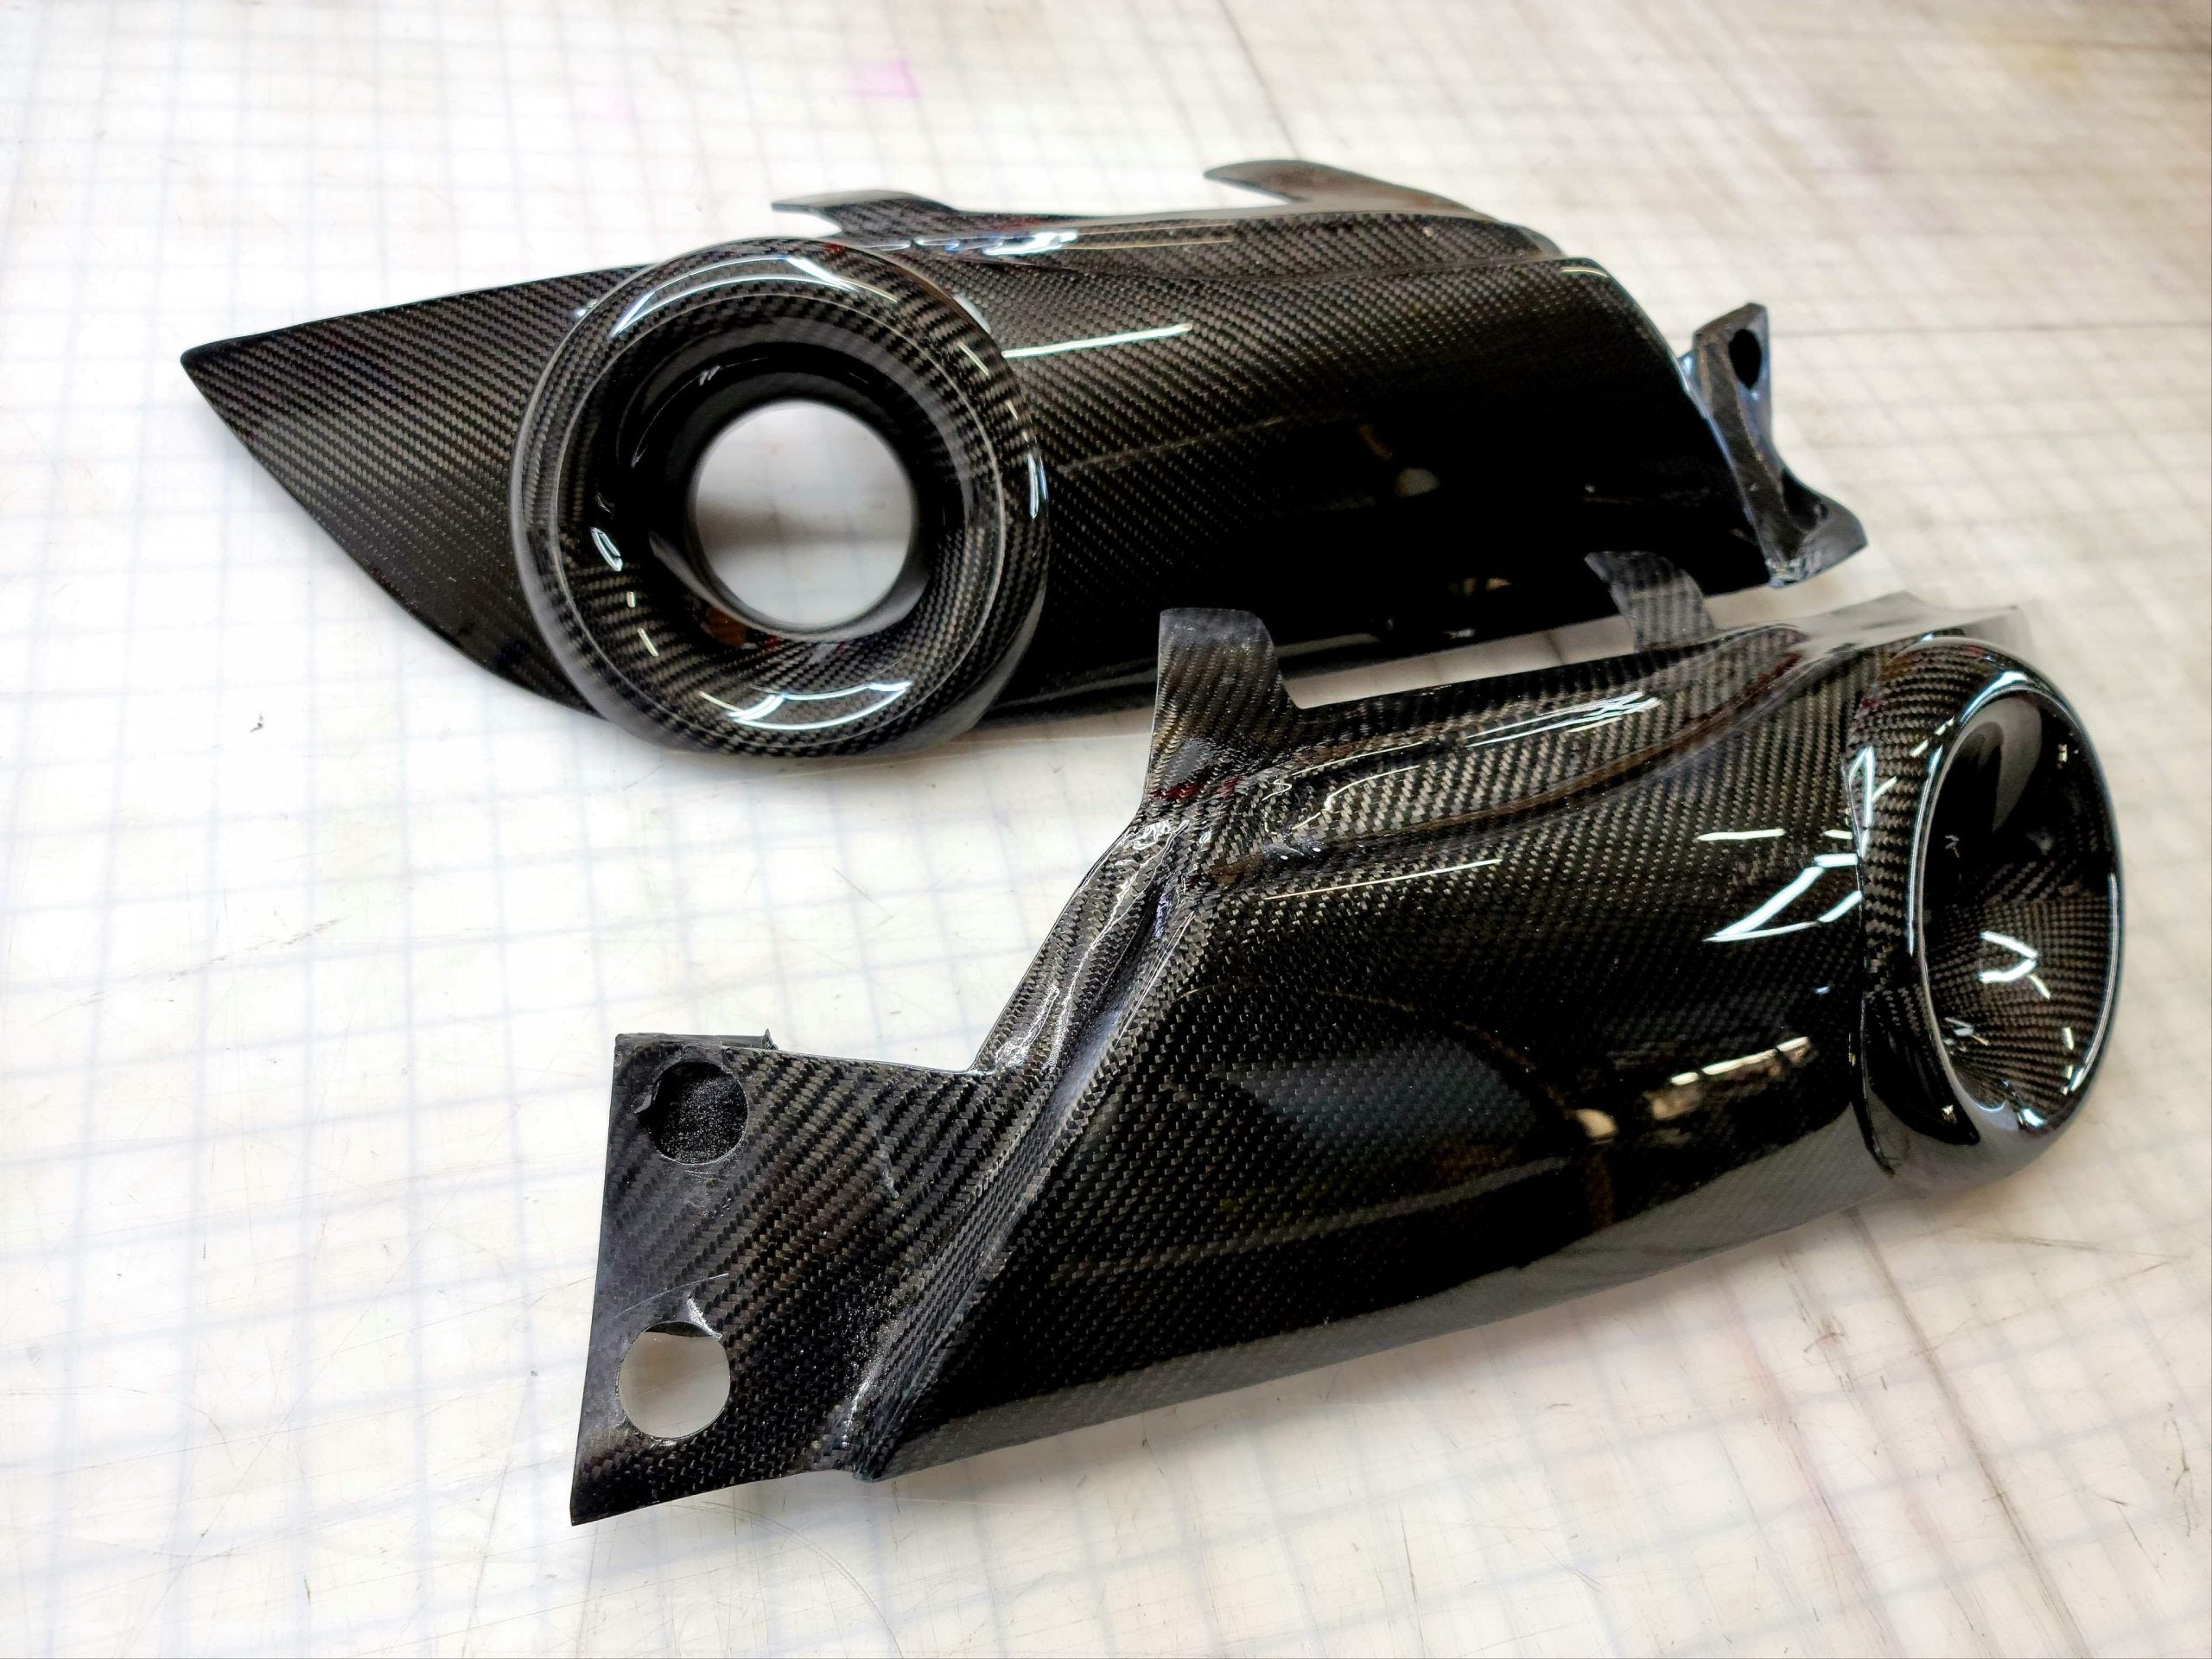 VTT/NRW E90 Carbon Fiber Headlight Delete